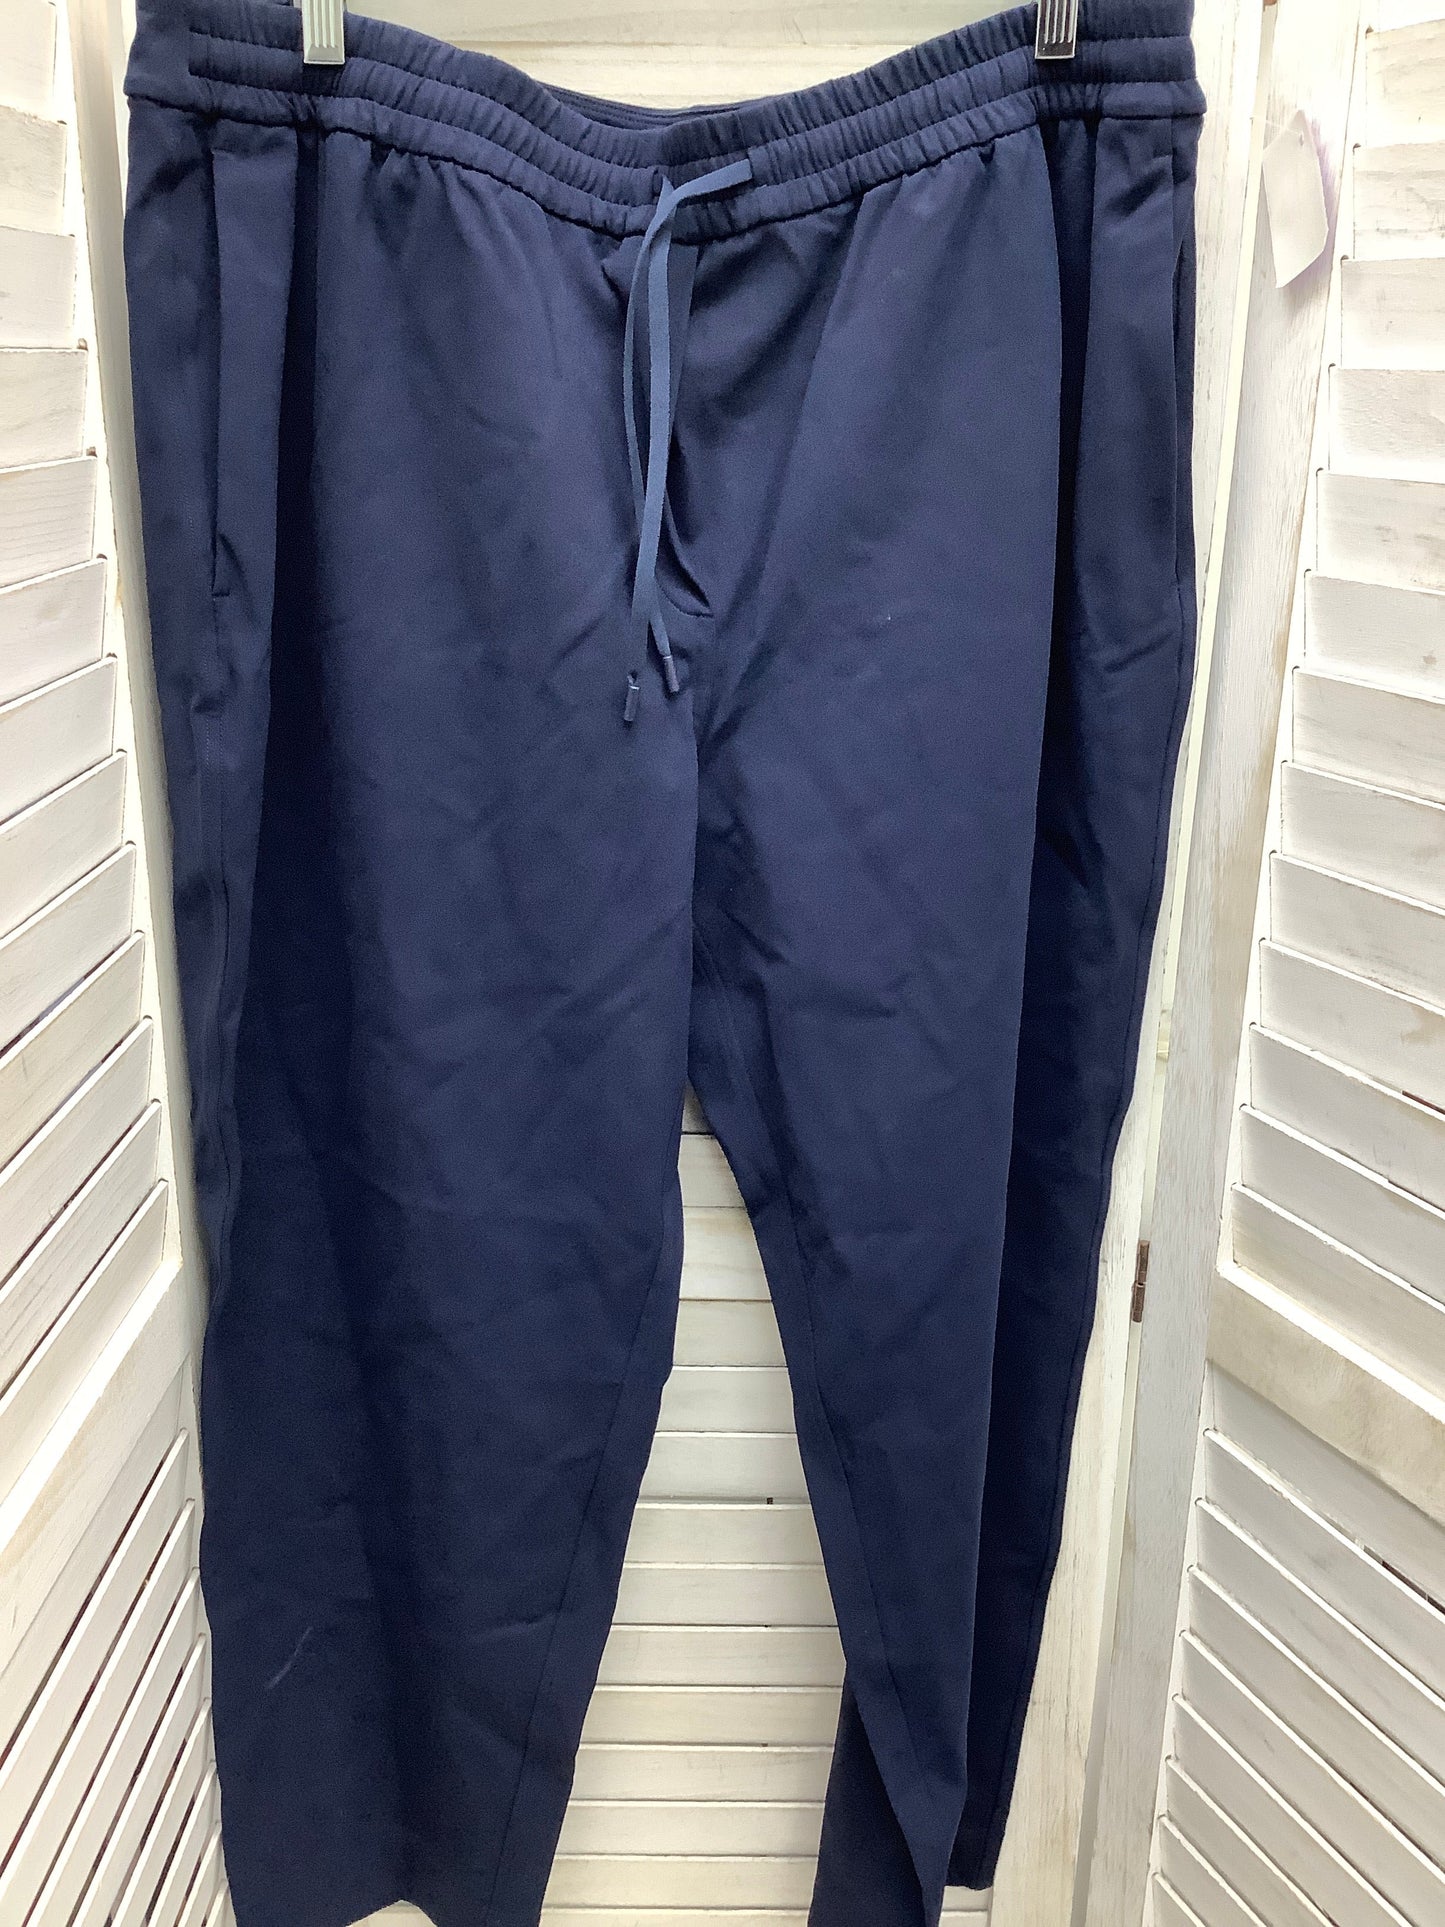 Navy Athletic Pants Lululemon, Size Xl